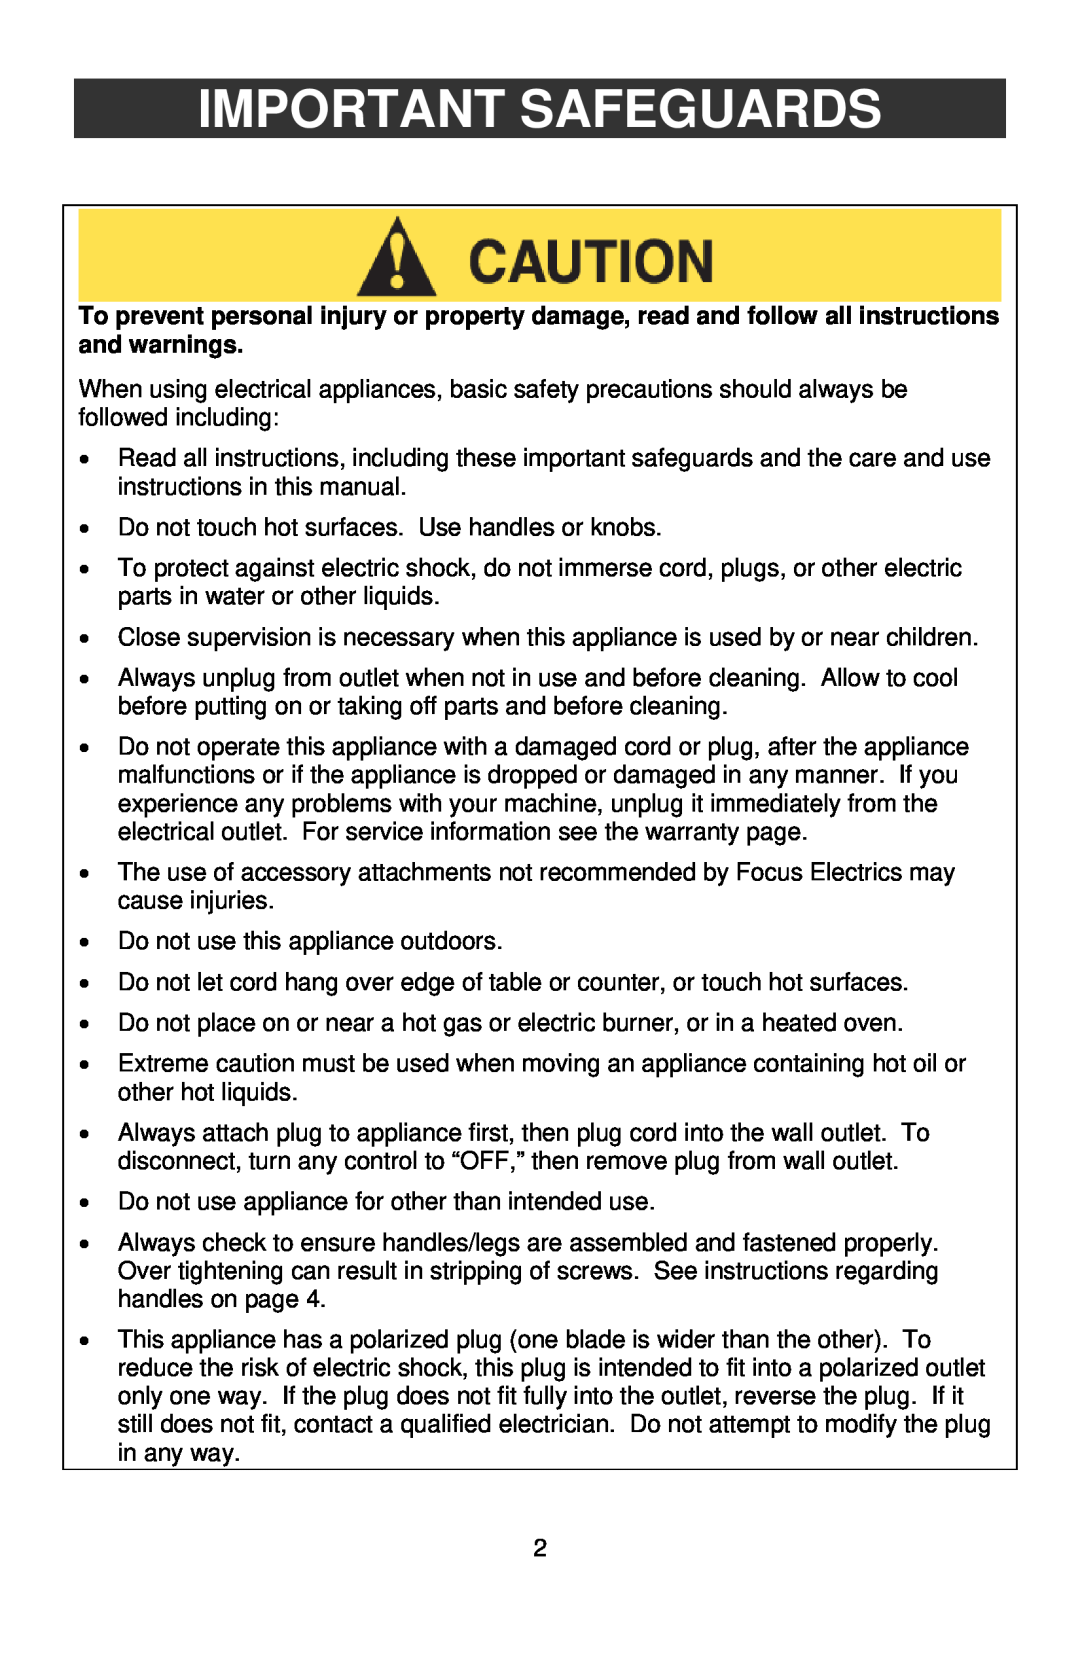 West Bend PRGD900, L5749 instruction manual Important Safeguards 